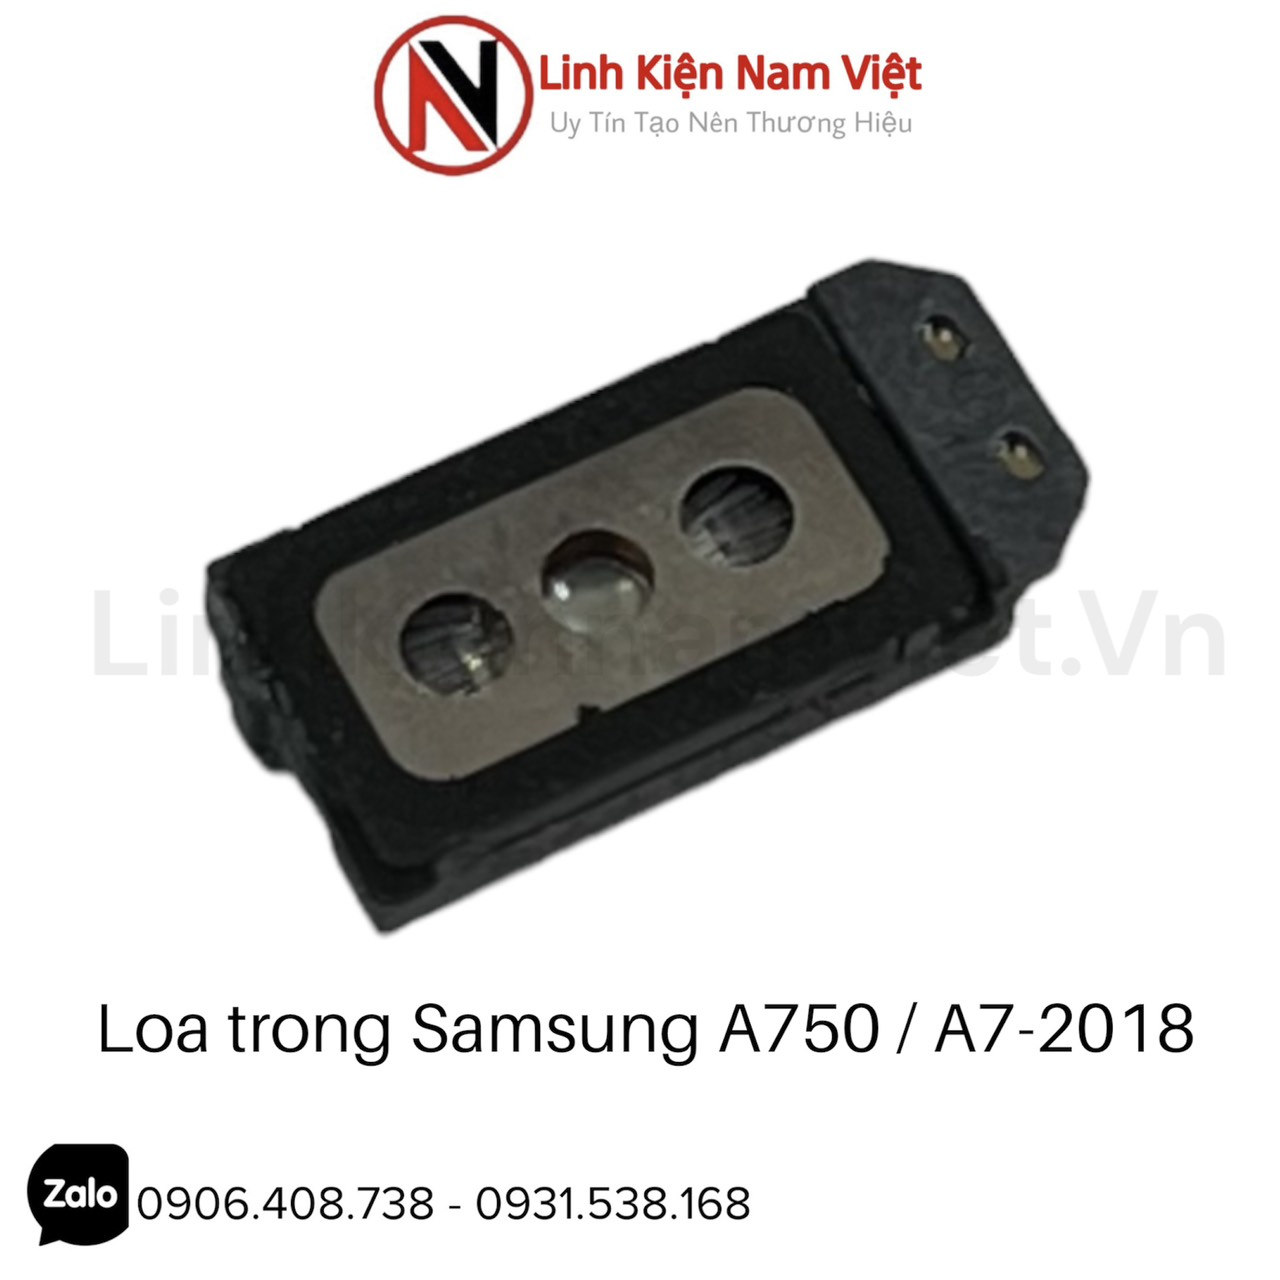 loa-trong-samsung-a750-a7-2018